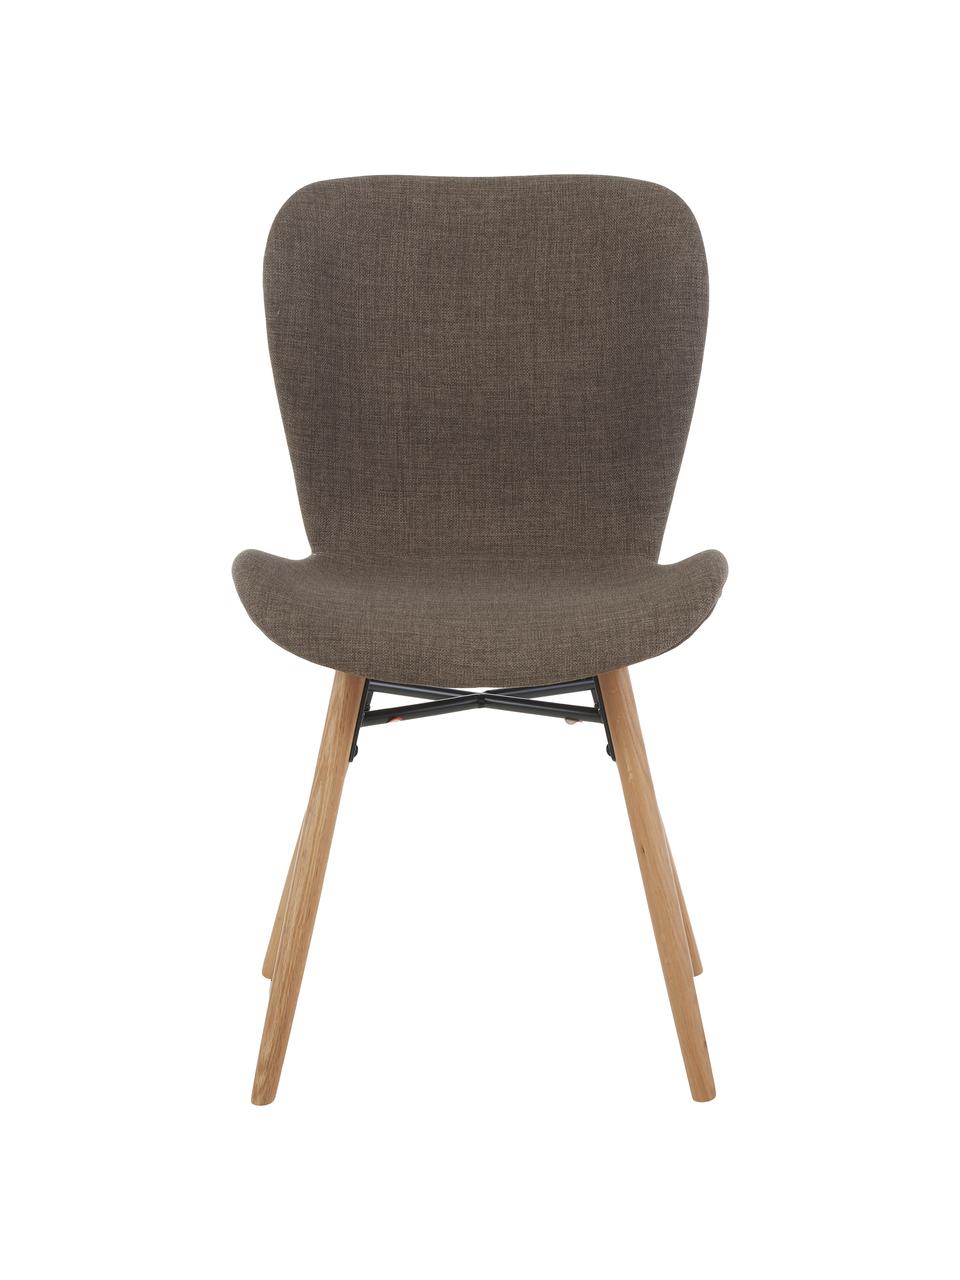 Čalouněná židle Batilda, 2 ks, Khaki, dub, Š 47 cm, H 53 cm